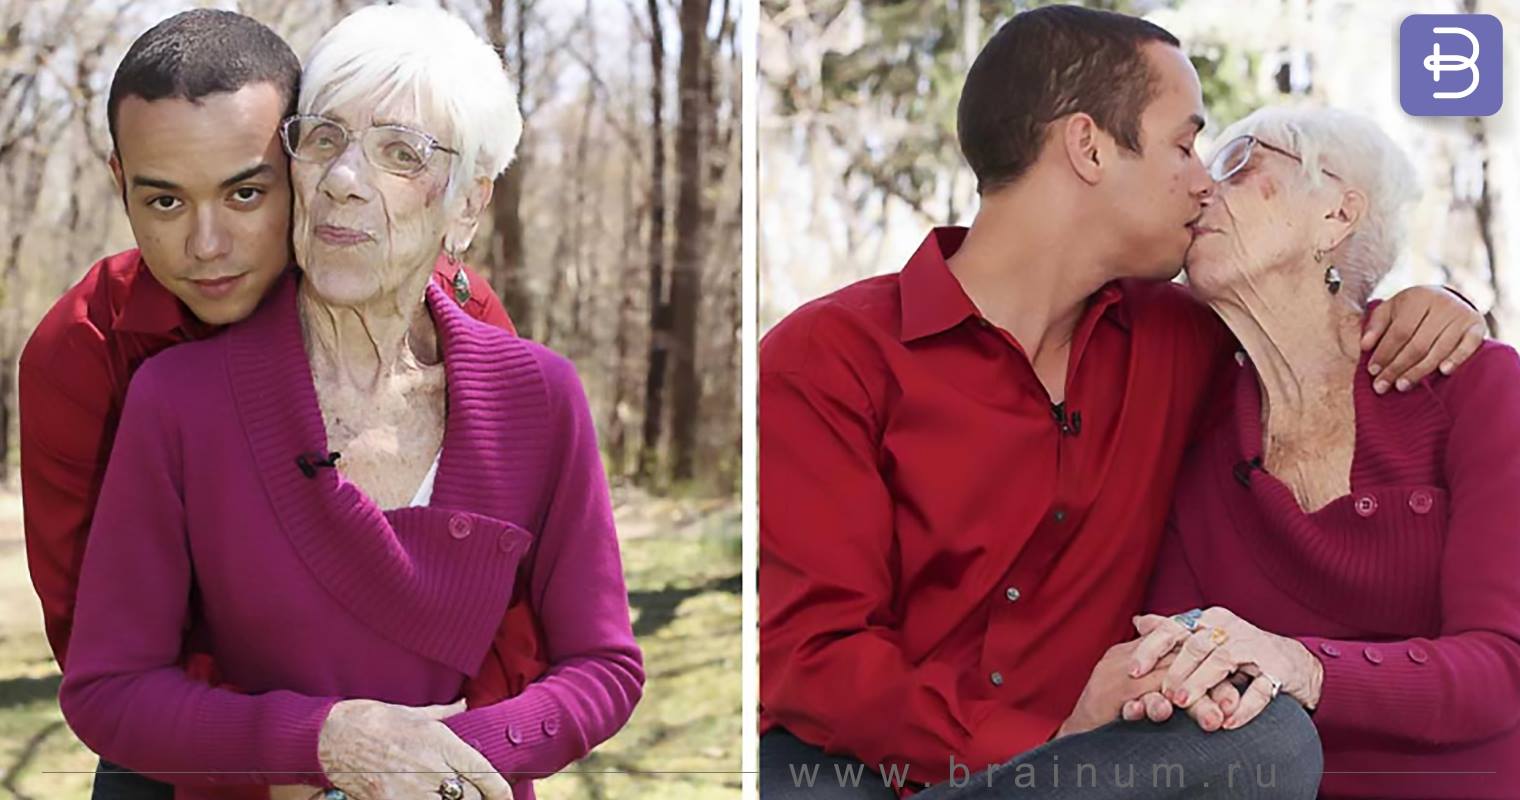 Как называют старых мужчин. Кайл Джонс и 91-летняя Марджори маккул. 31-Летний Кайл Джонс и 91-летняя Марджори маккул. Кайл Джонс (31 год) встречается с Марджори маккул — 91-летней бабушкой.. Бабка и молодой человек.